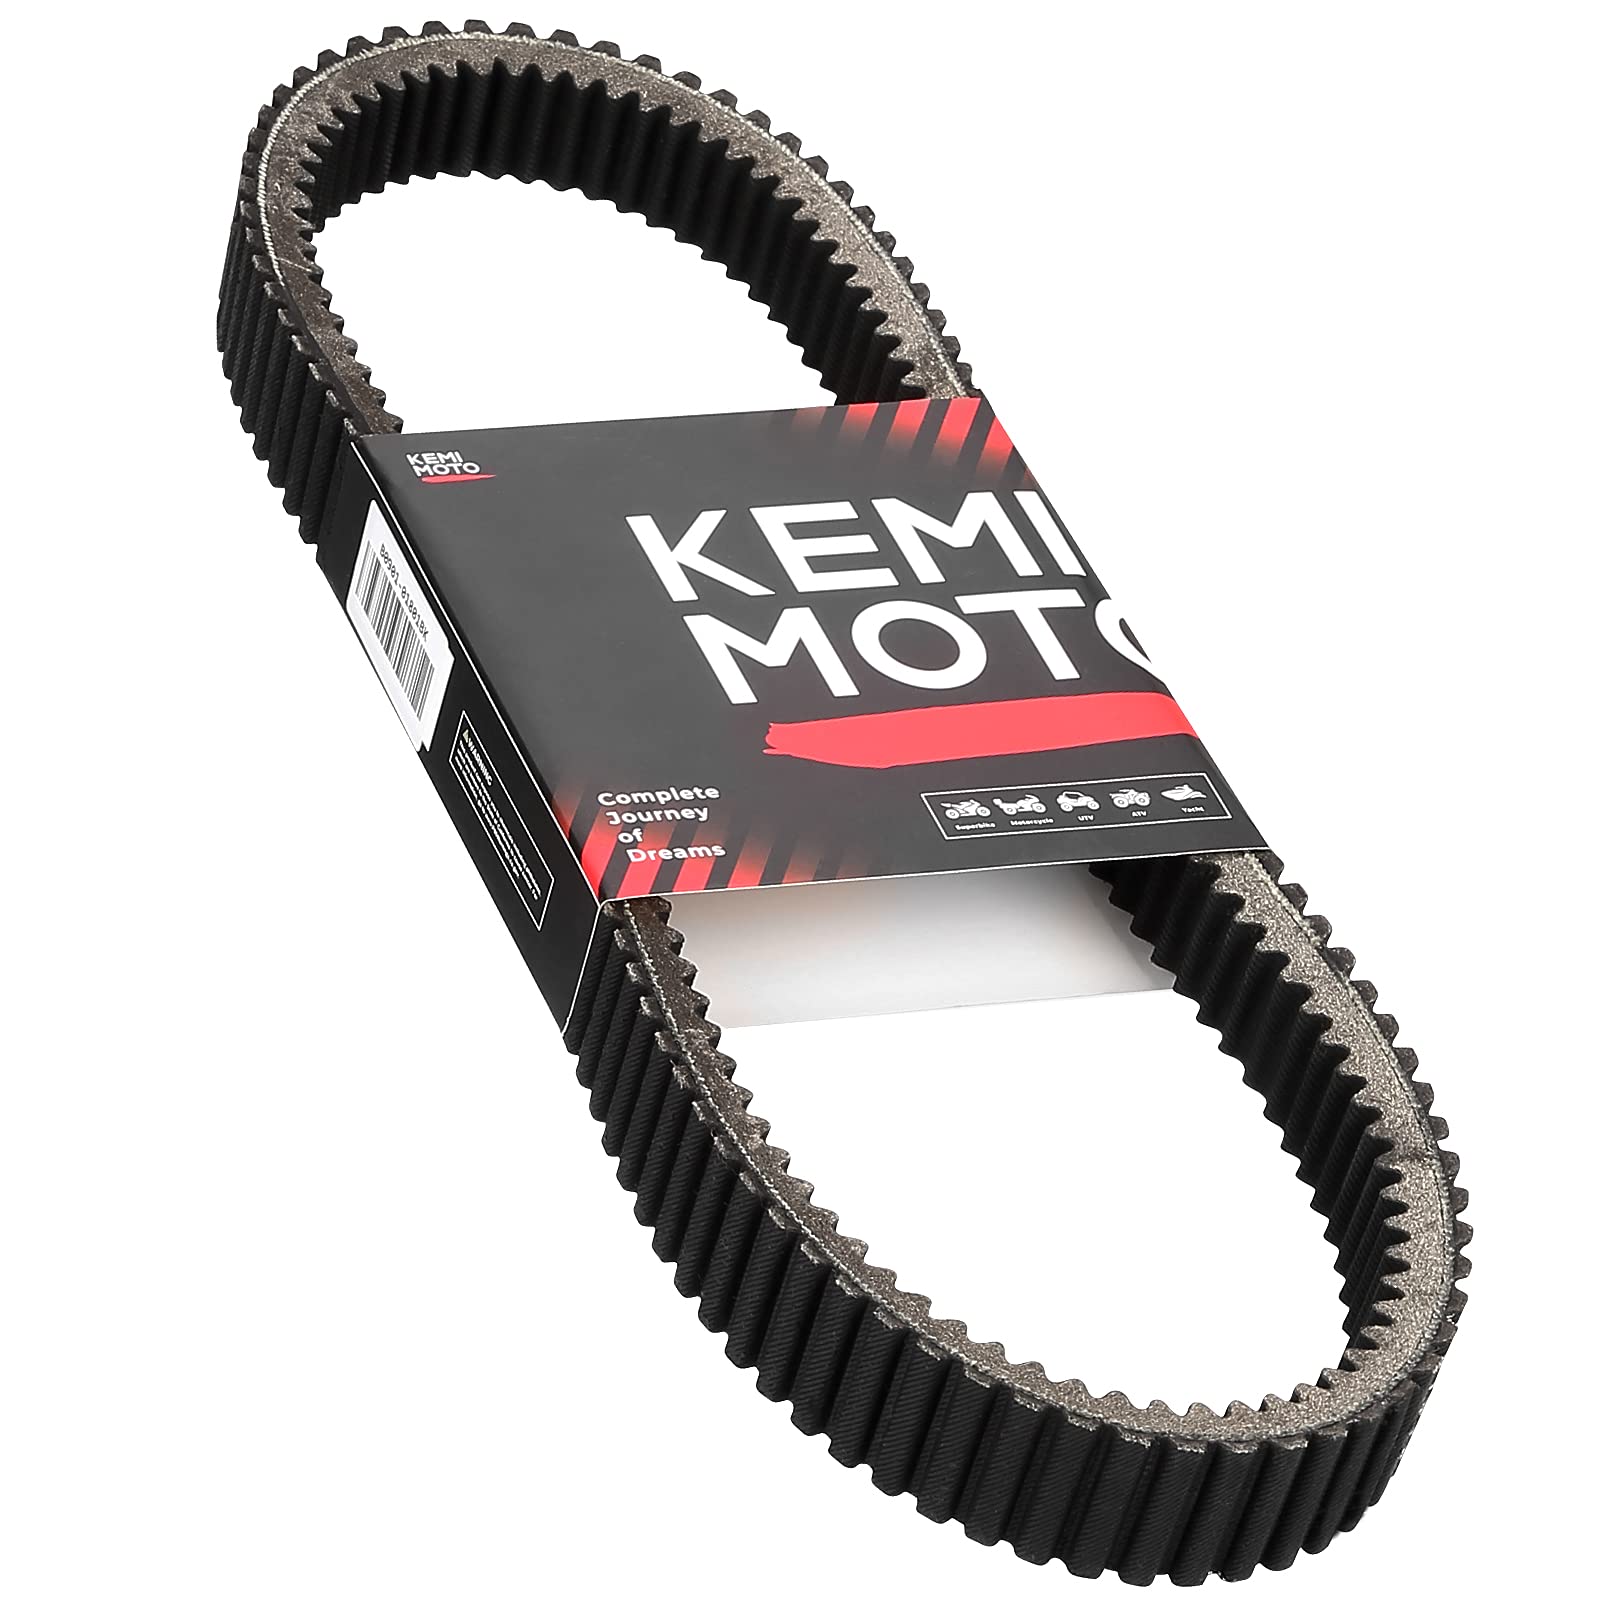 Drive Belt & Belt Changing Tool Kit For Can-Am Maverick X3/MAX - Kemimoto